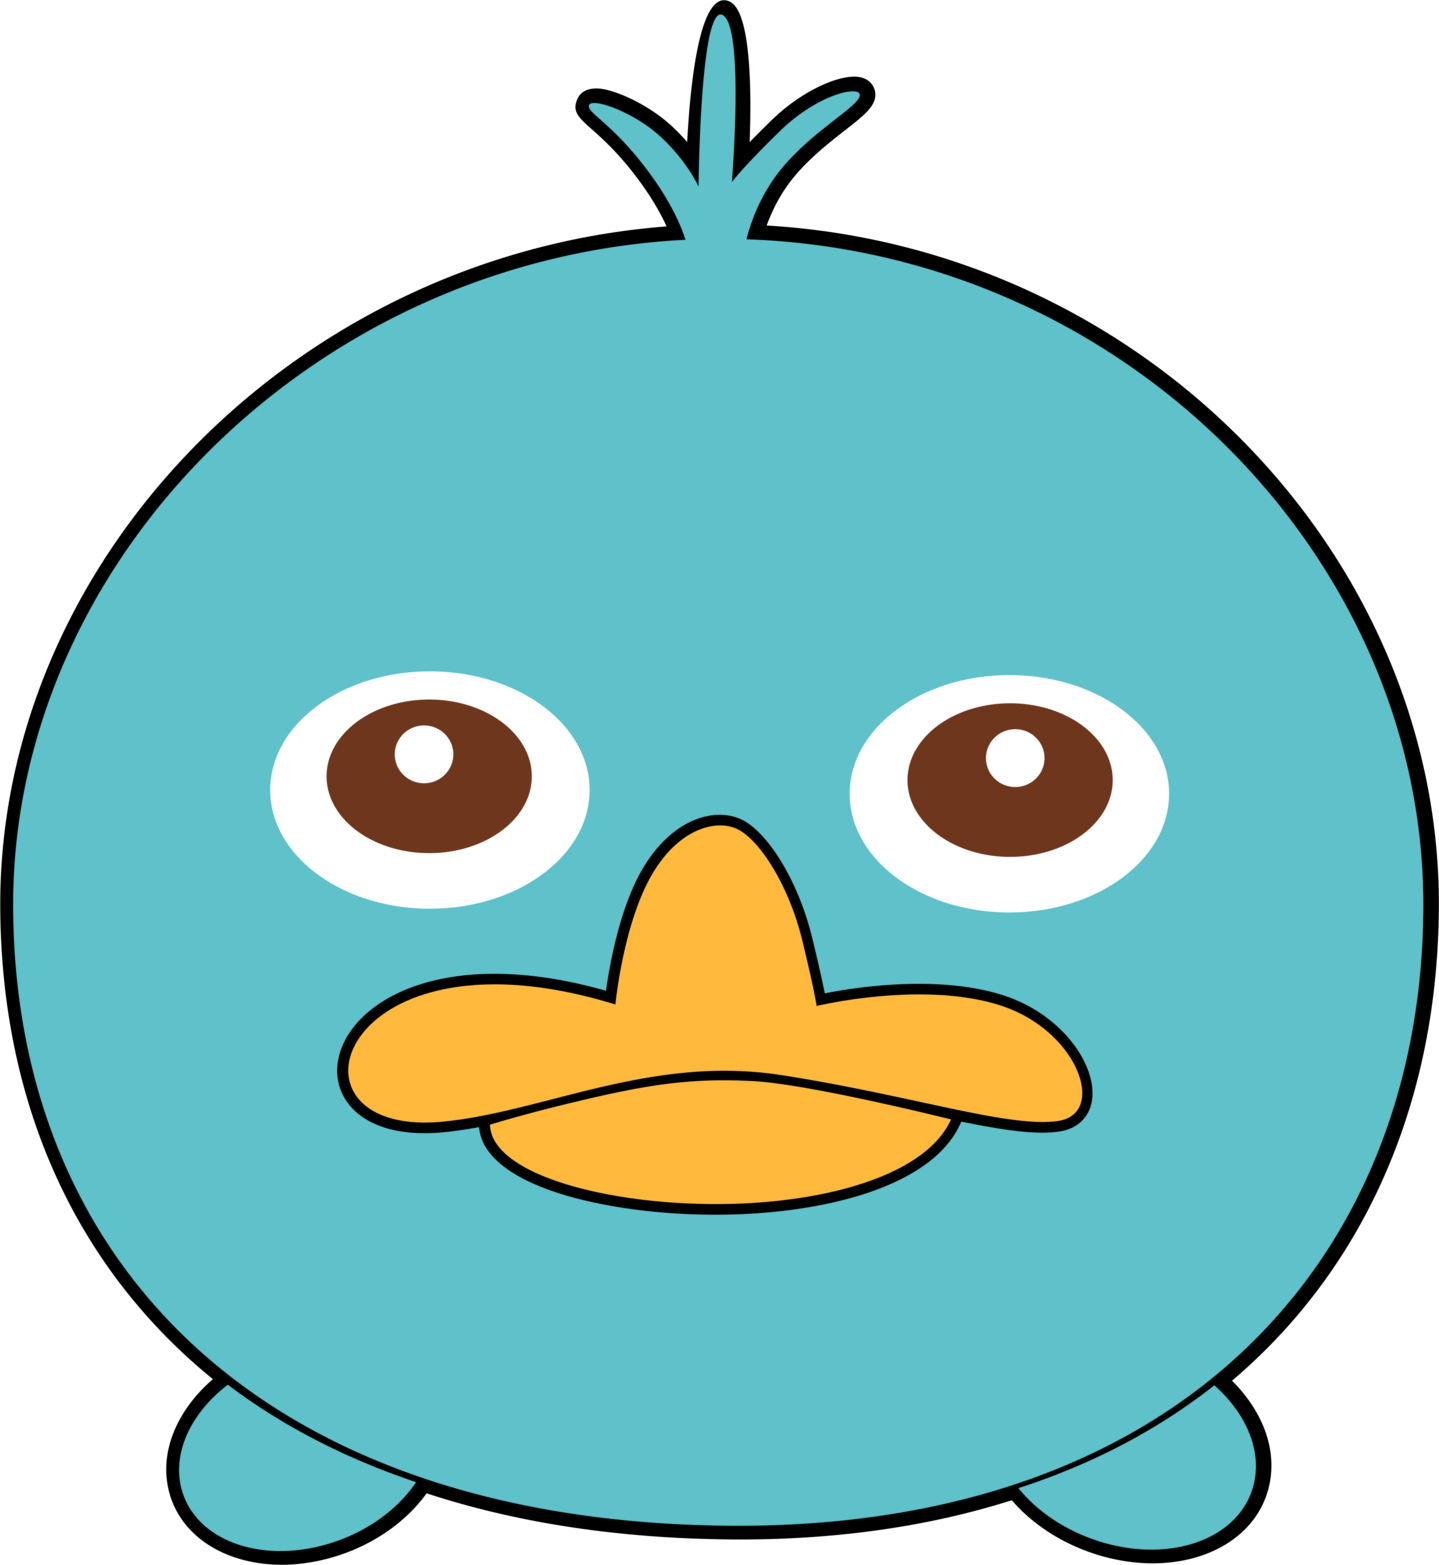 Blue Bird Tsum Tsum Graphic PNG image